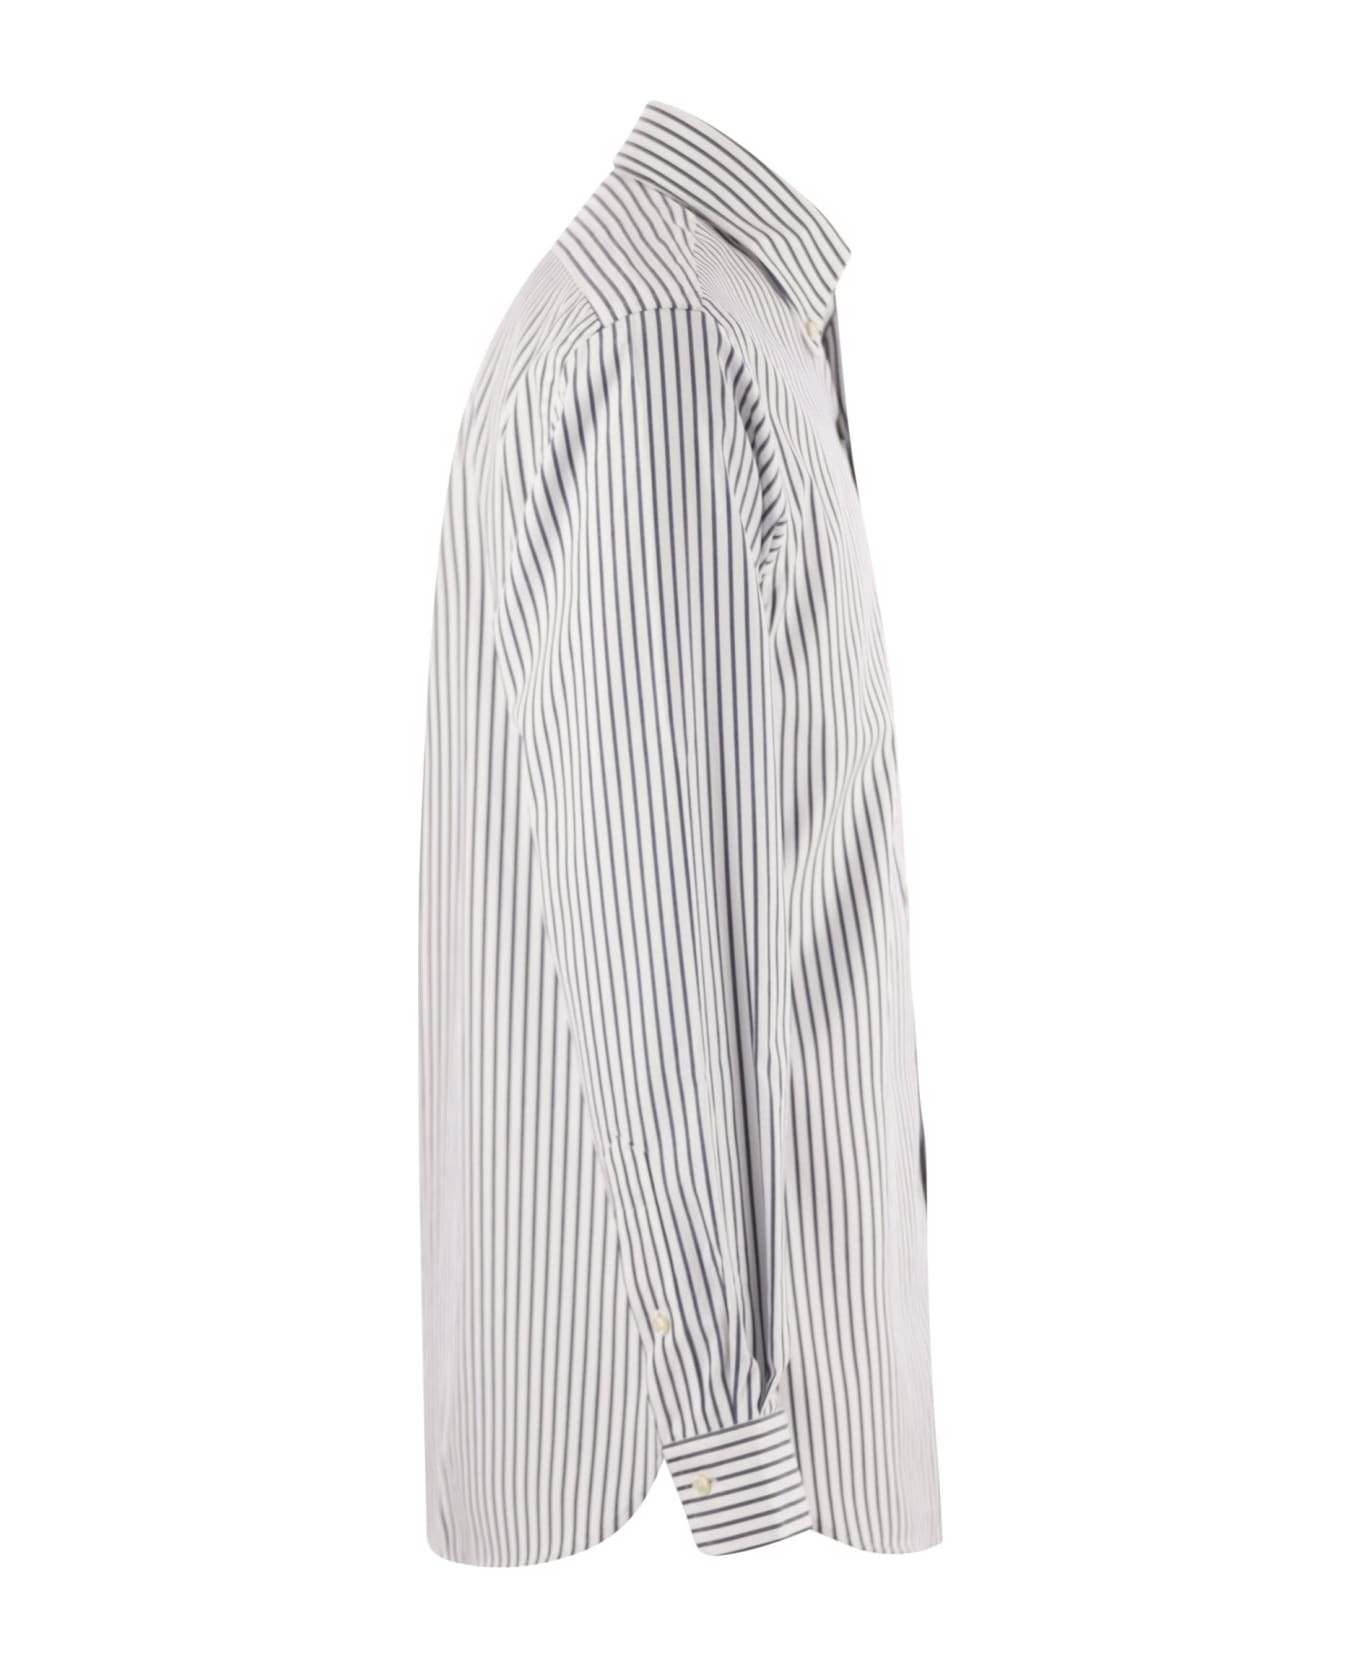 Polo Ralph Lauren Custom-fit Striped Cotton Shirt - White/blue